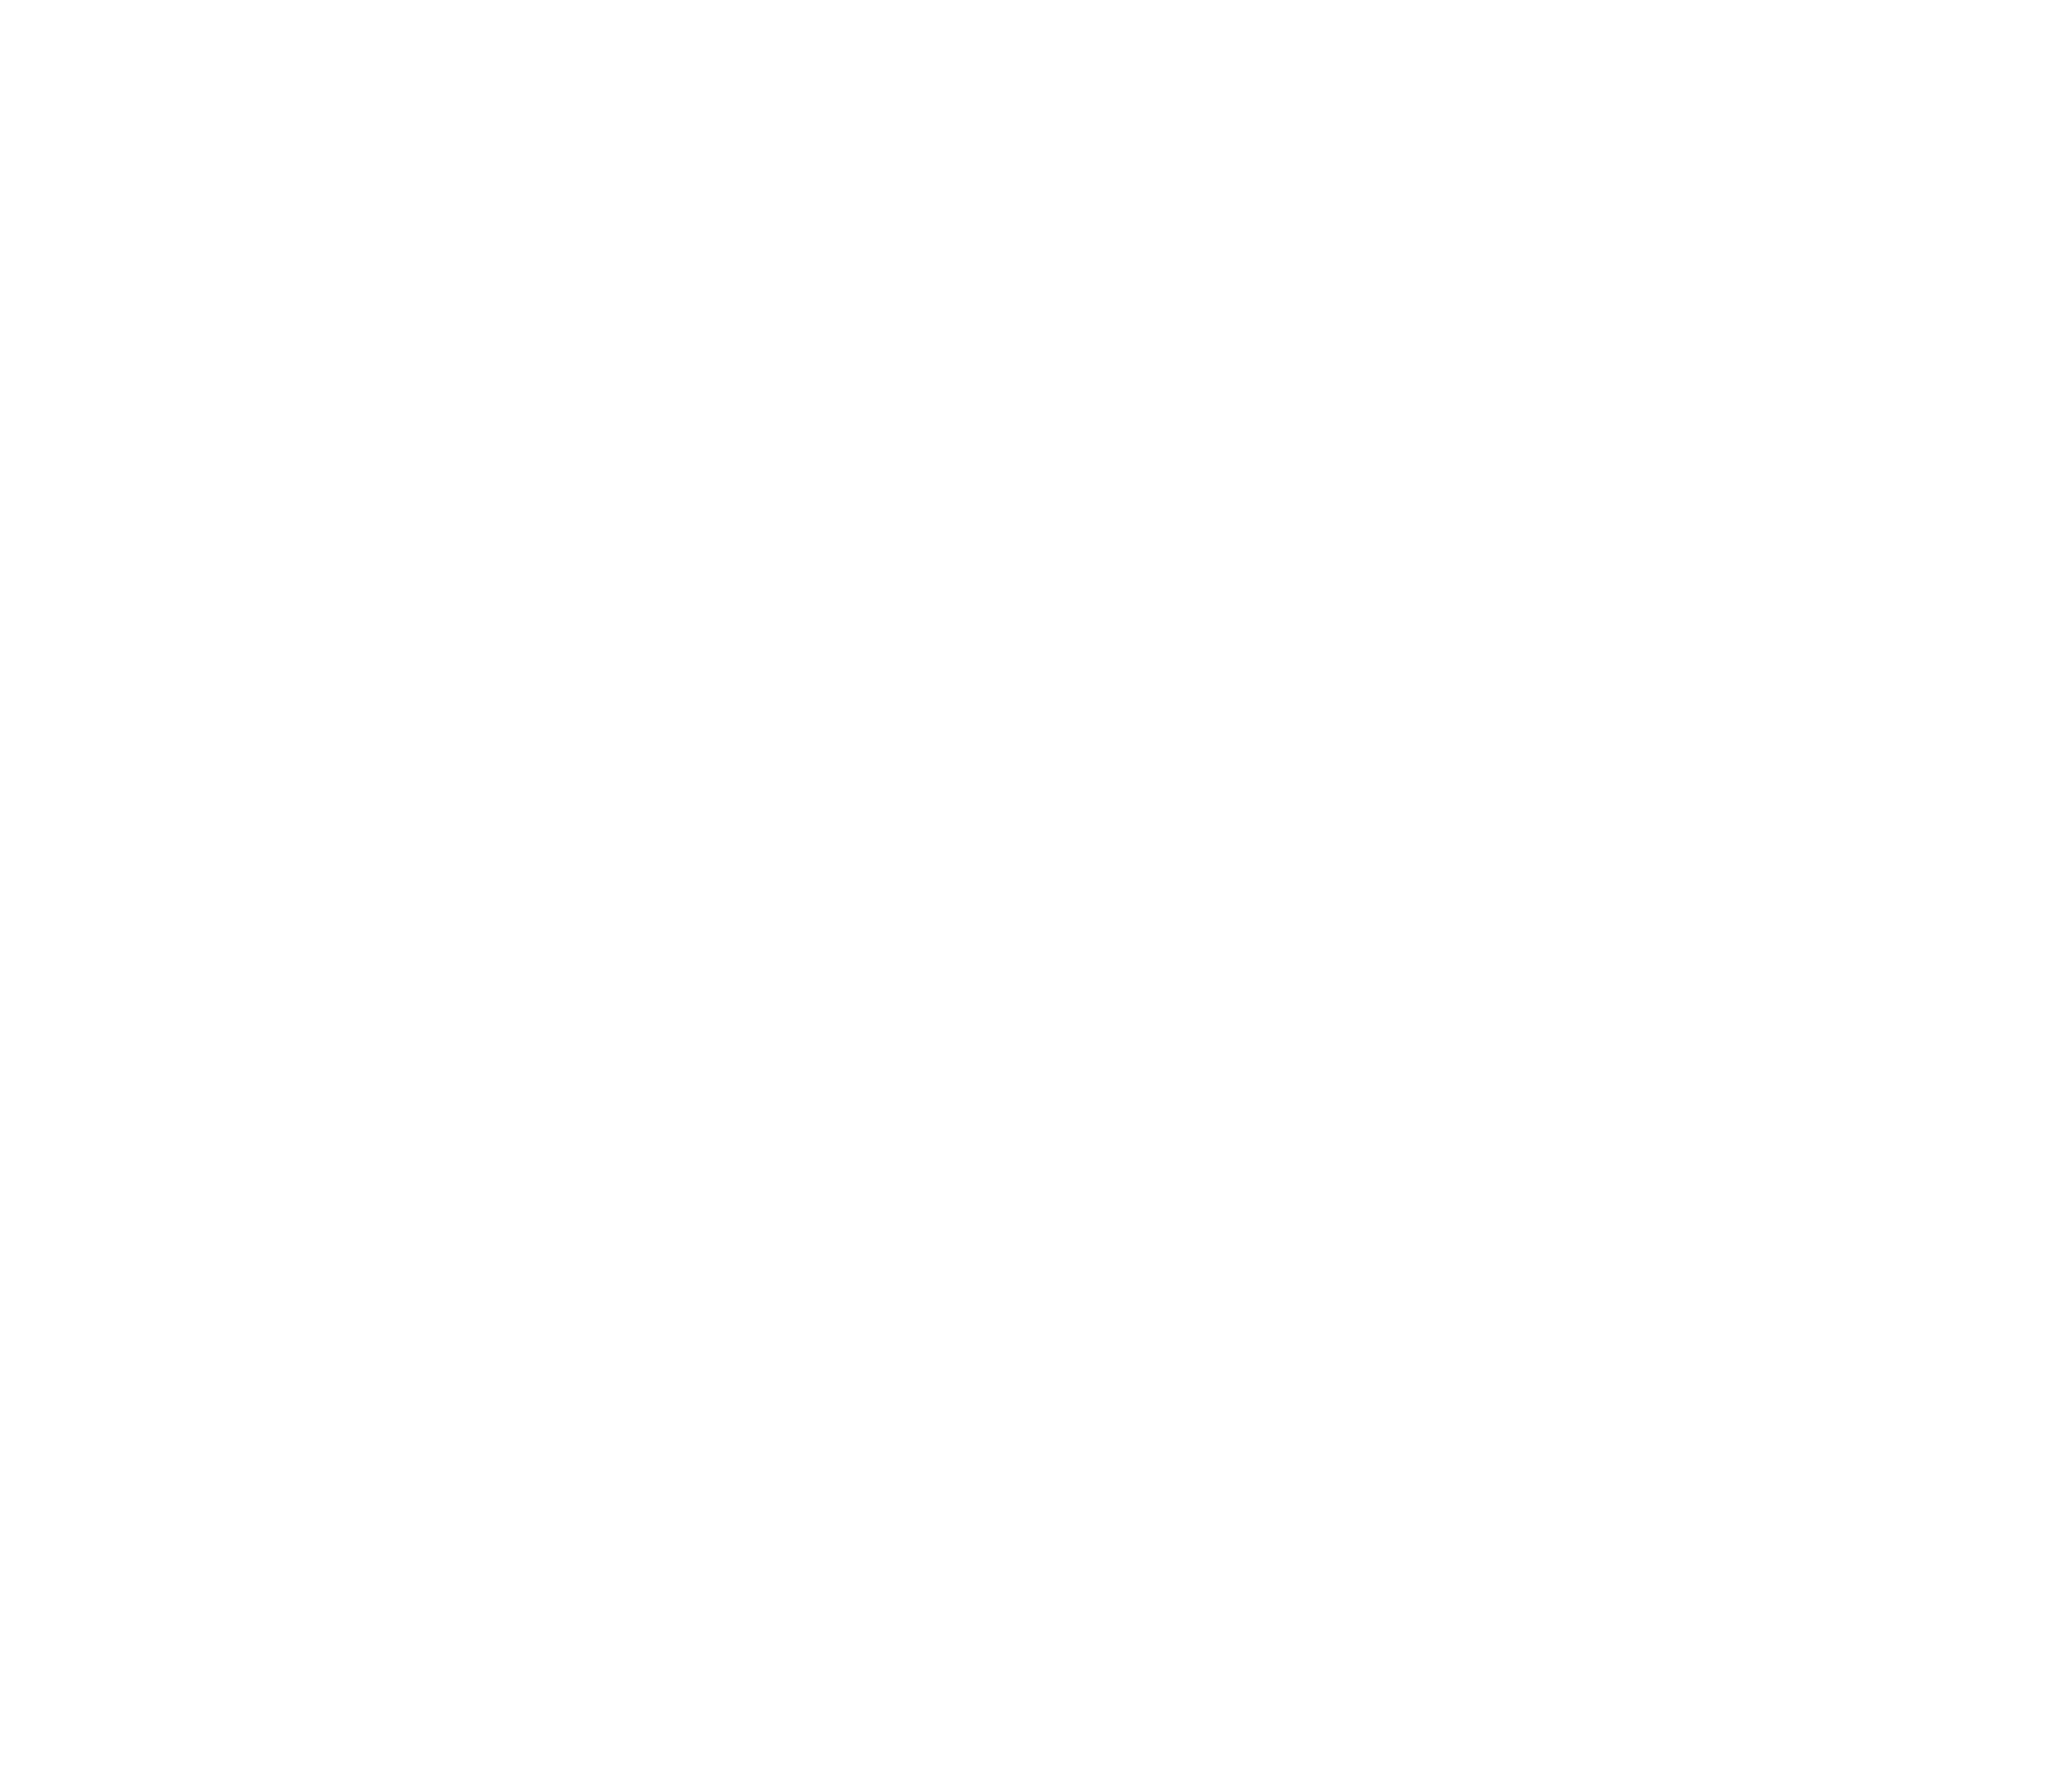 PROFESSIONAL BULL JUMPING